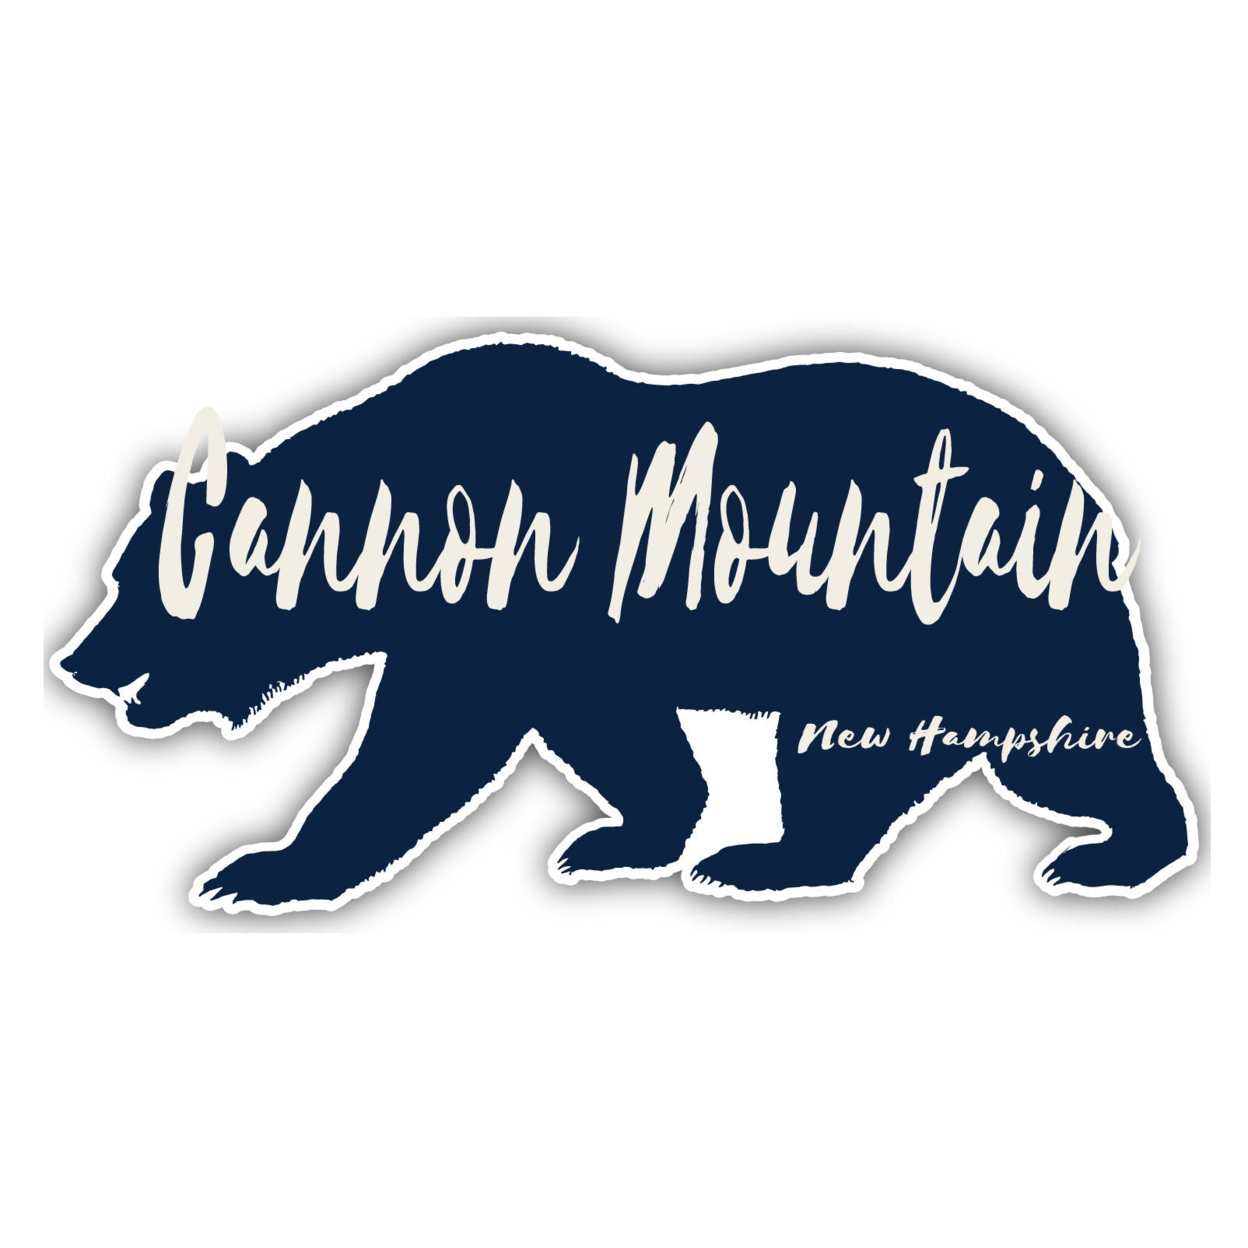 Cannon Mountain New Hampshire Souvenir Decorative Stickers (Choose Theme And Size) - Single Unit, 8-Inch, Bear